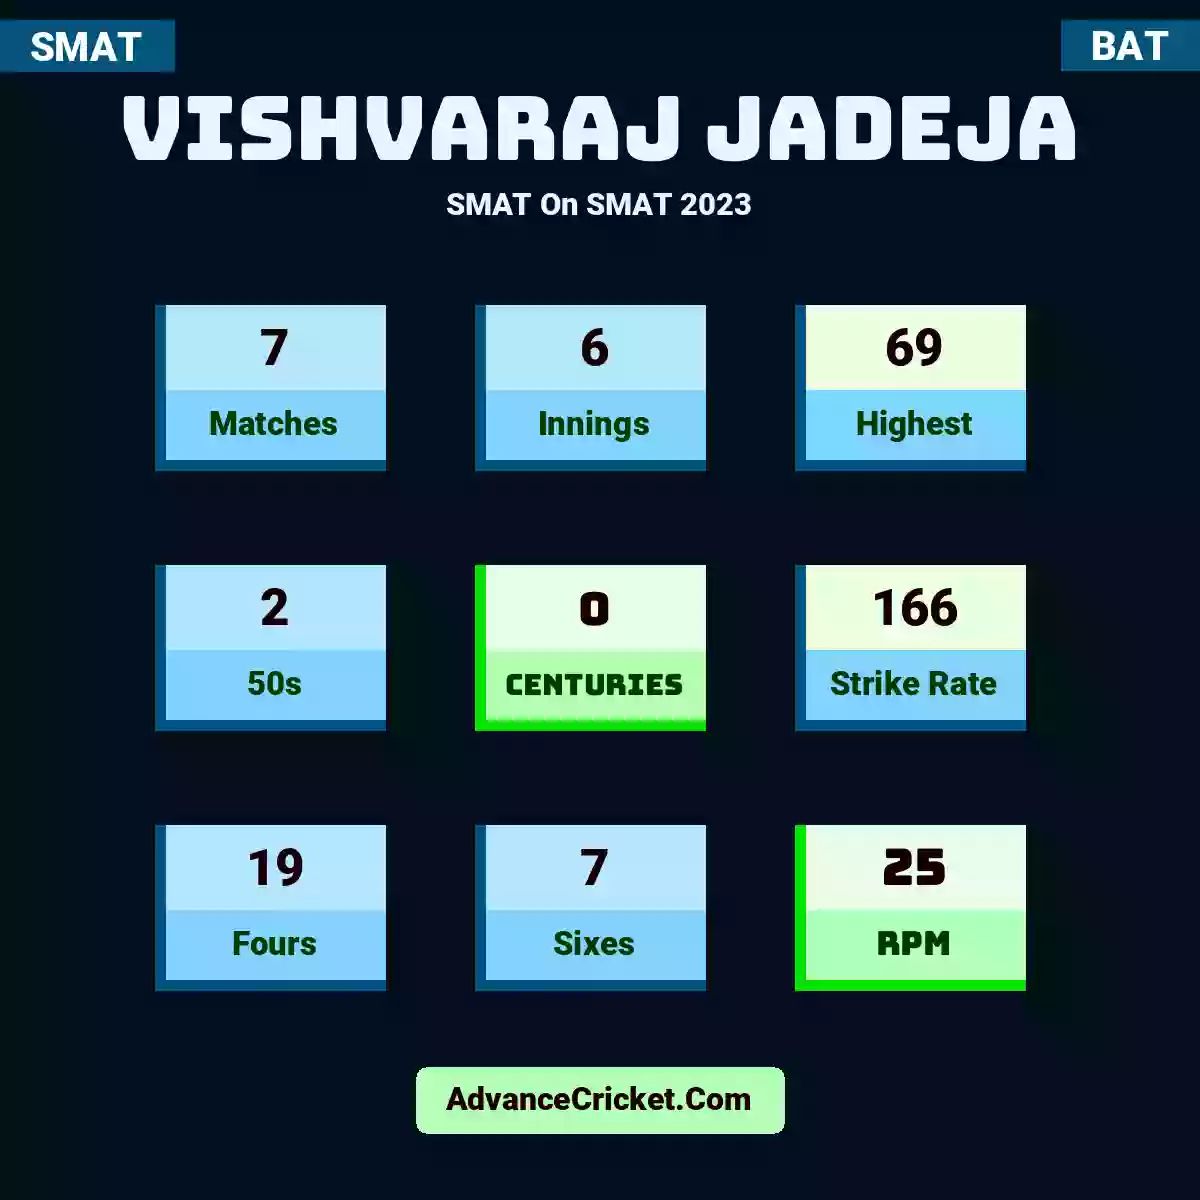 Vishvaraj Jadeja SMAT  On SMAT 2023, Vishvaraj Jadeja played 7 matches, scored 69 runs as highest, 2 half-centuries, and 0 centuries, with a strike rate of 166. V.Jadeja hit 19 fours and 7 sixes, with an RPM of 25.